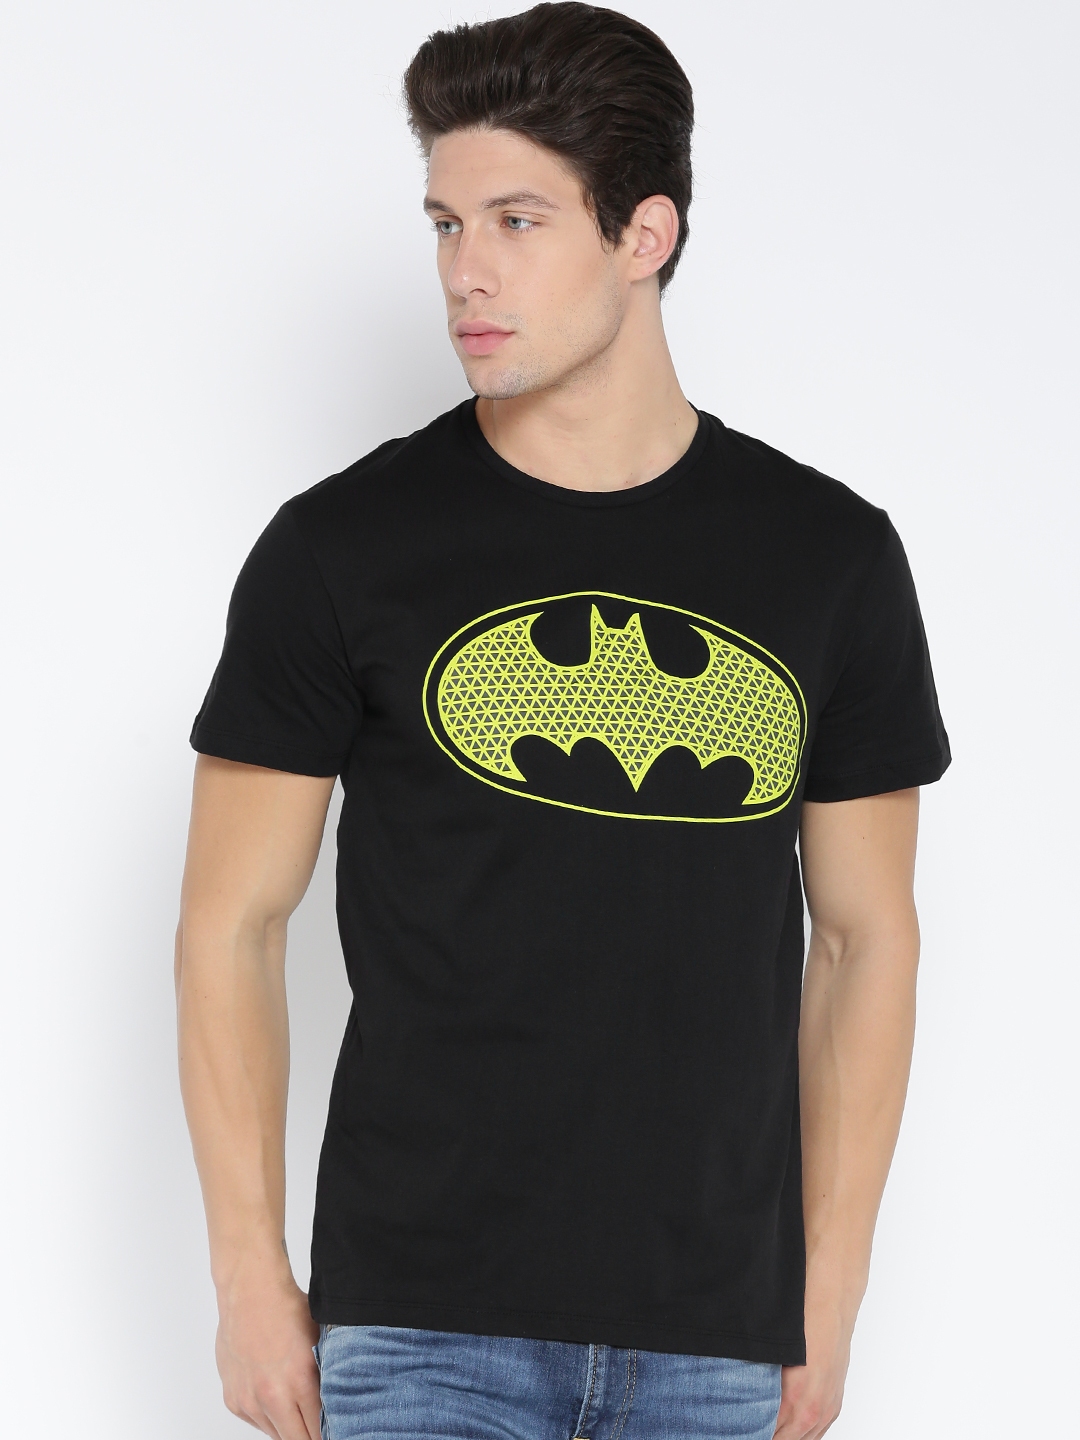 Buy DC Comics Batman Featured Black Tshirt For Men - Tshirts for Men ...